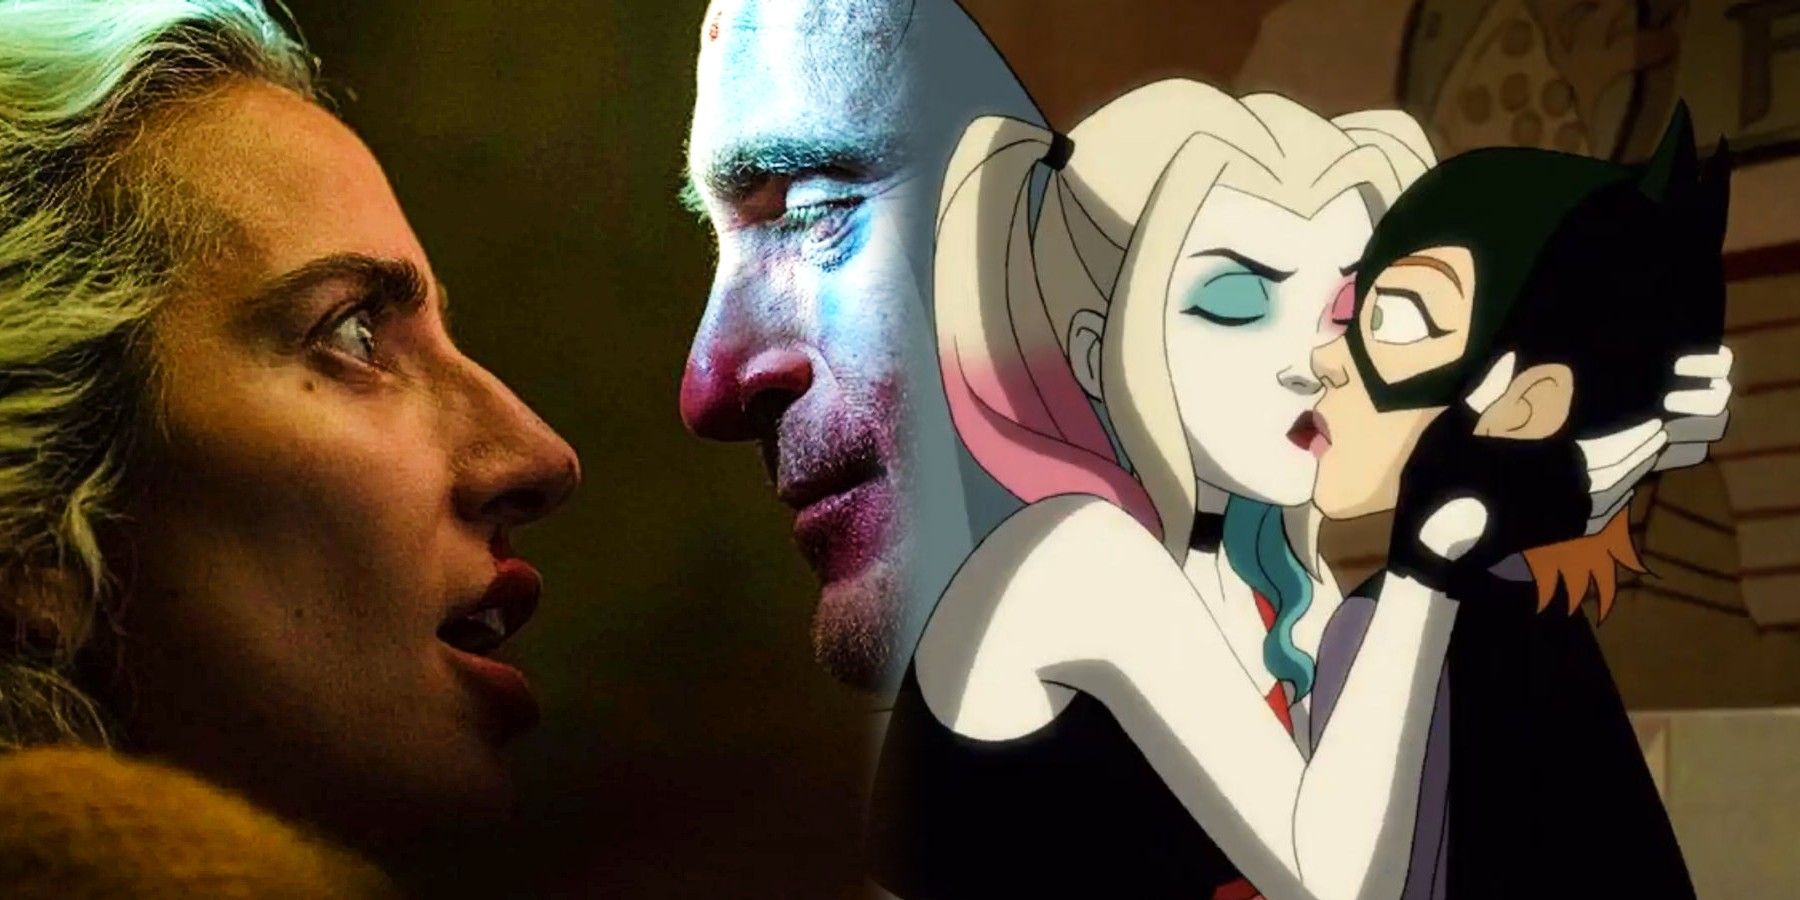 Joker 2 Folie à Deux Joaquin Phoenix Lady Gaga Harley Quinn Batgirl kiss